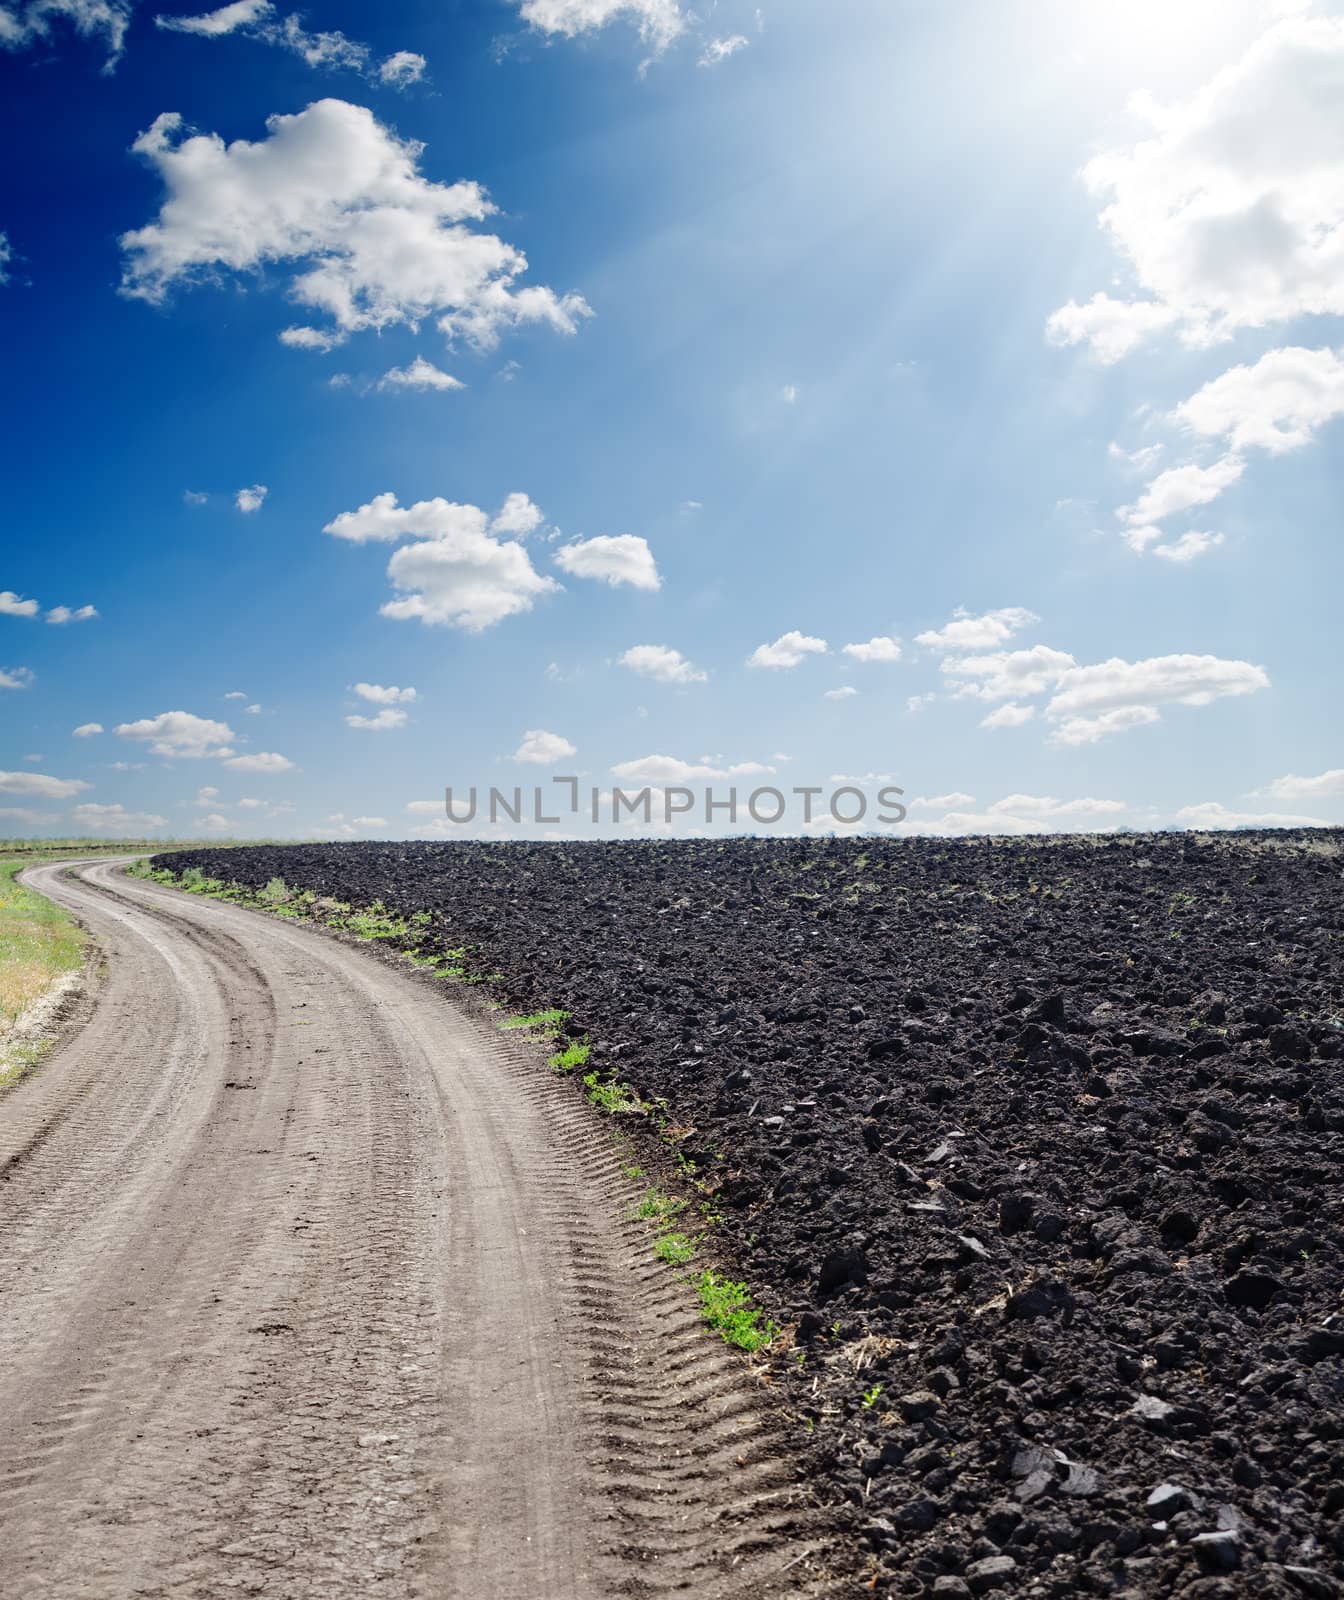 rural road near black ploughed field